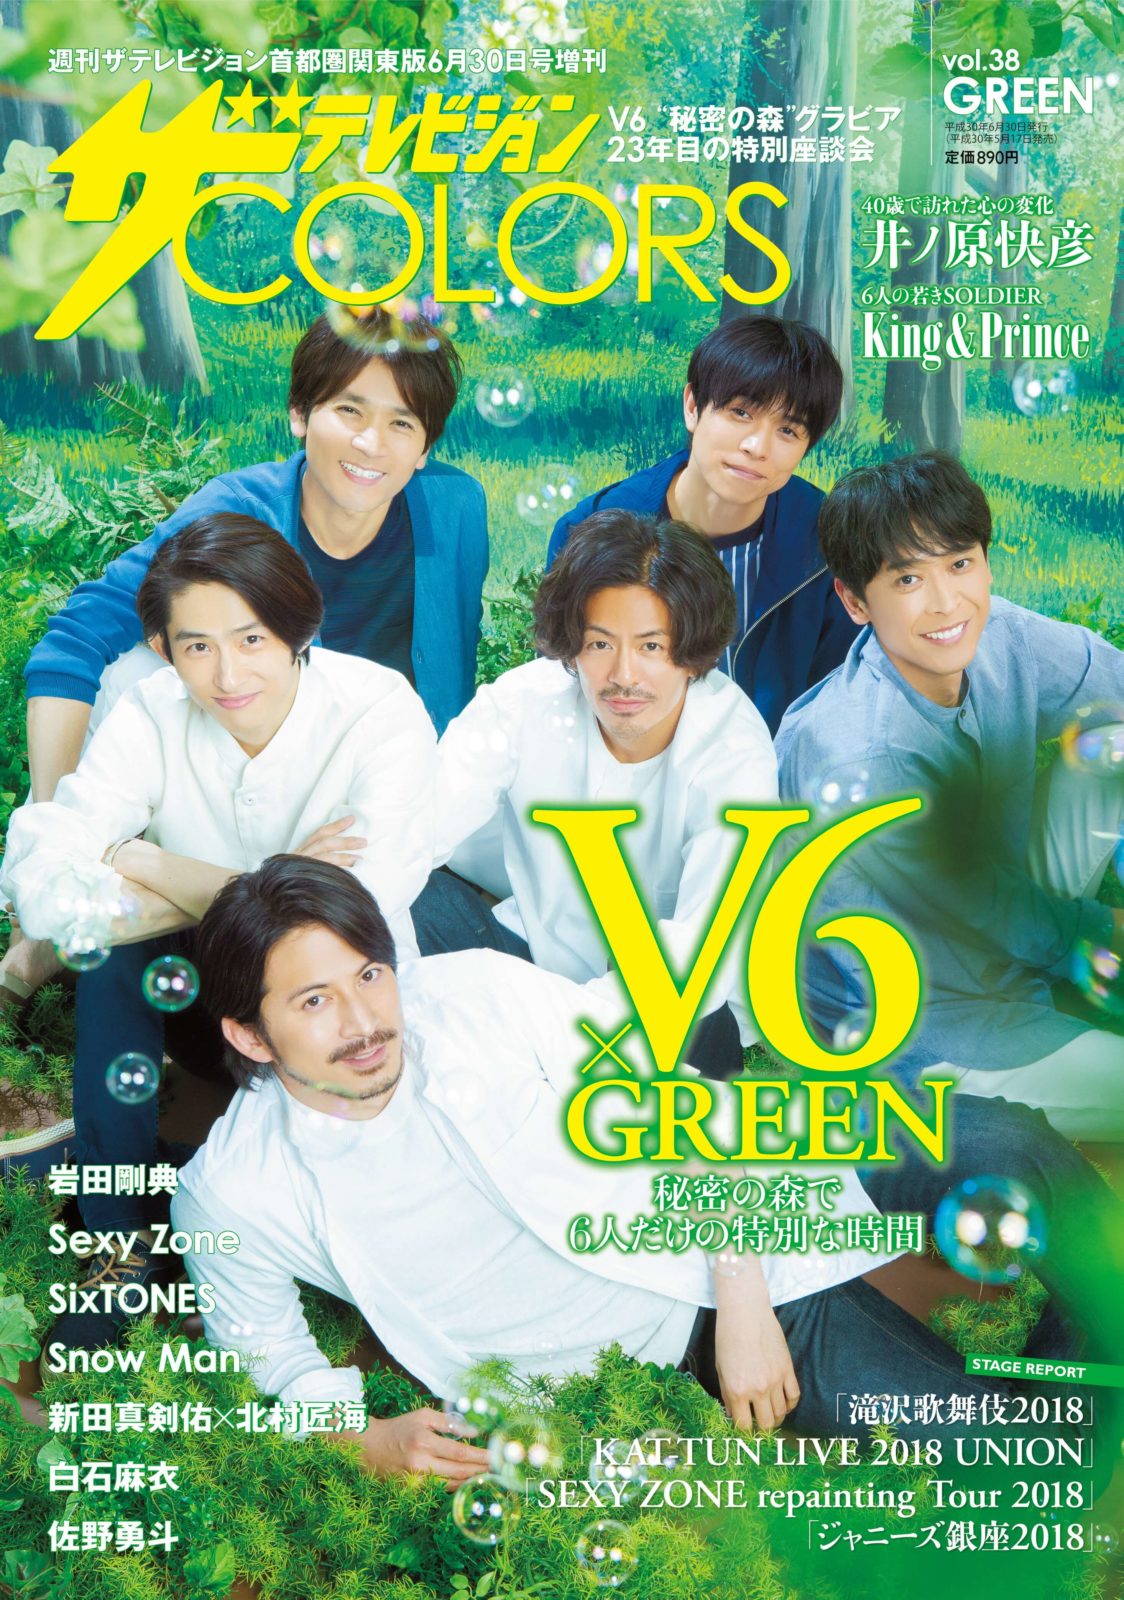 V6 “GREEN”がテーマの表紙に登場 デビュー20周年の心境の変化語るサムネイル画像!